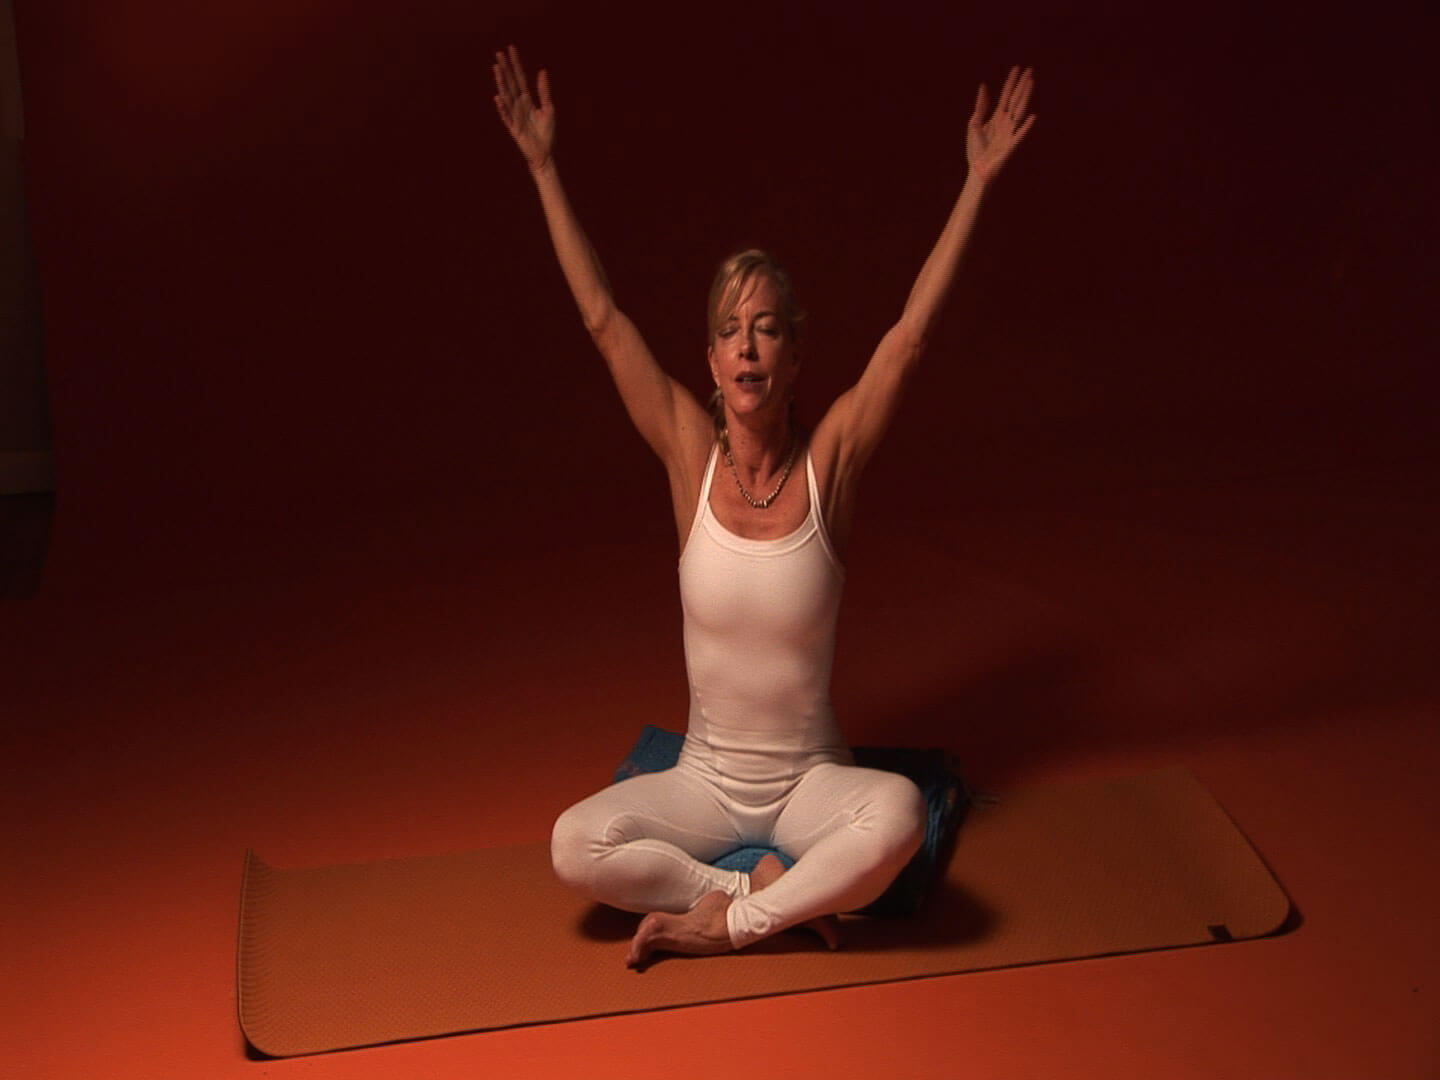 Restorative Yoga Practice Exercise Video On DVD - Real Bodywork